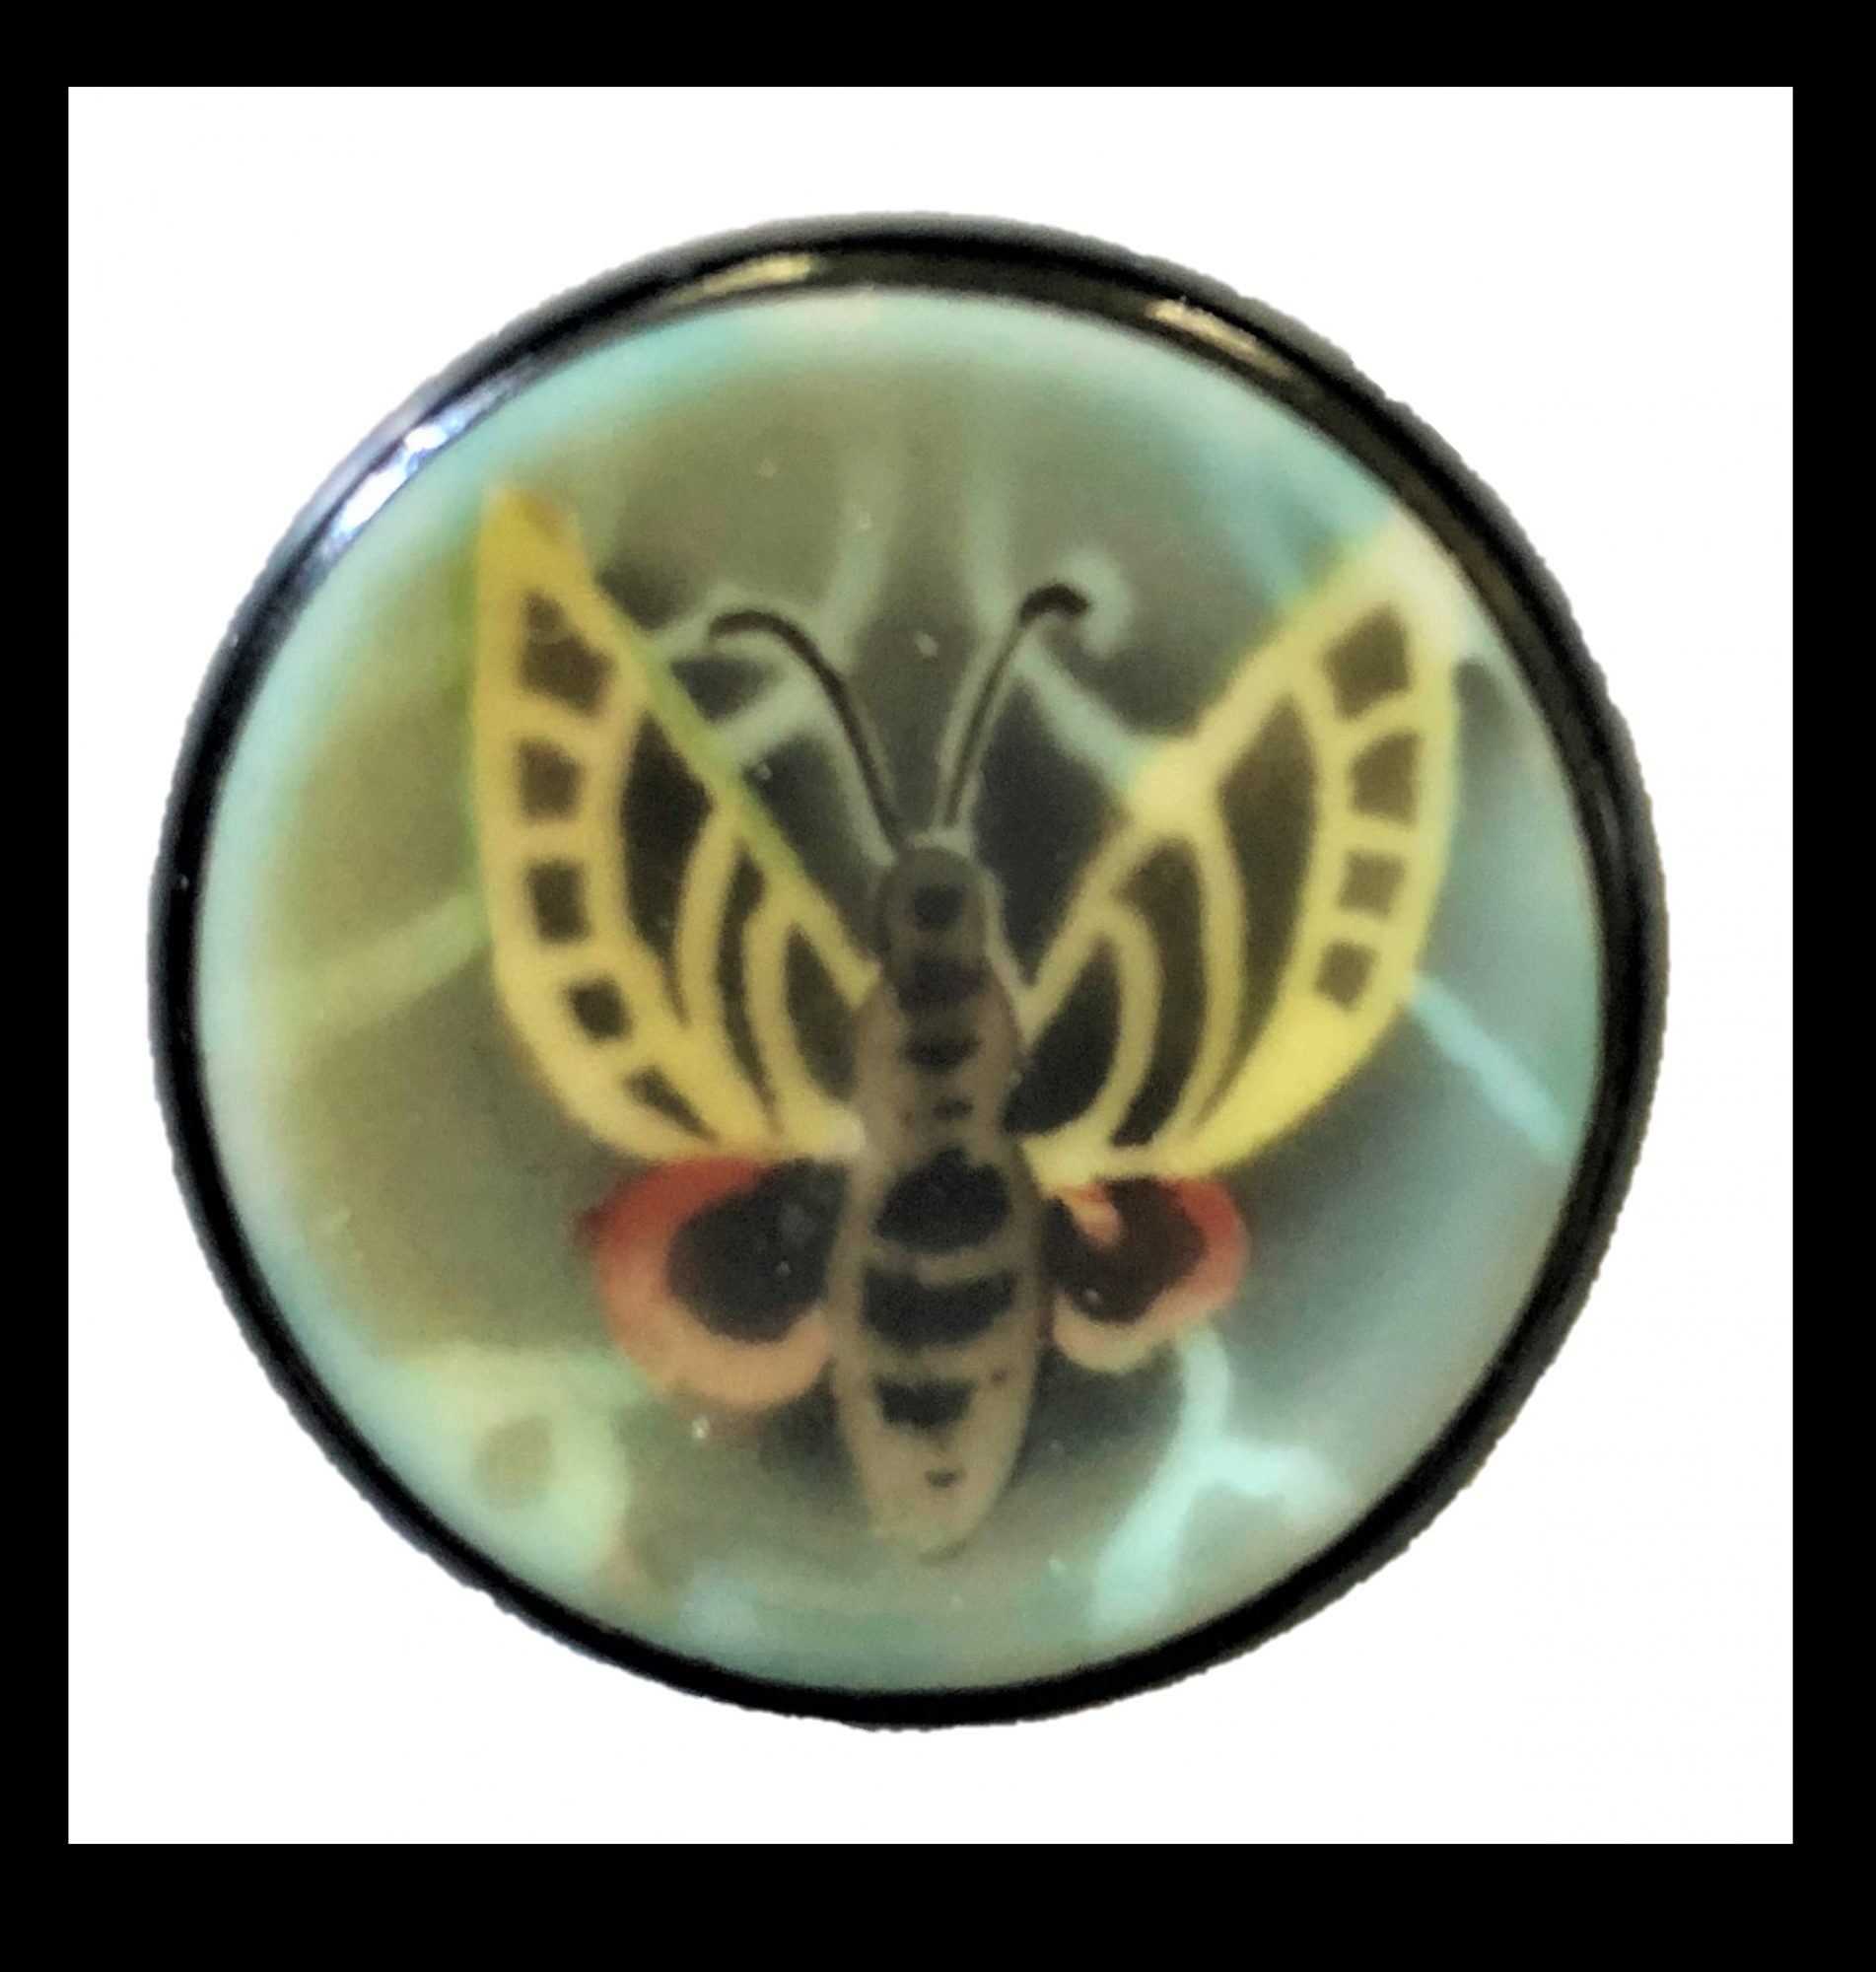 Wonderful black glass butterfly button